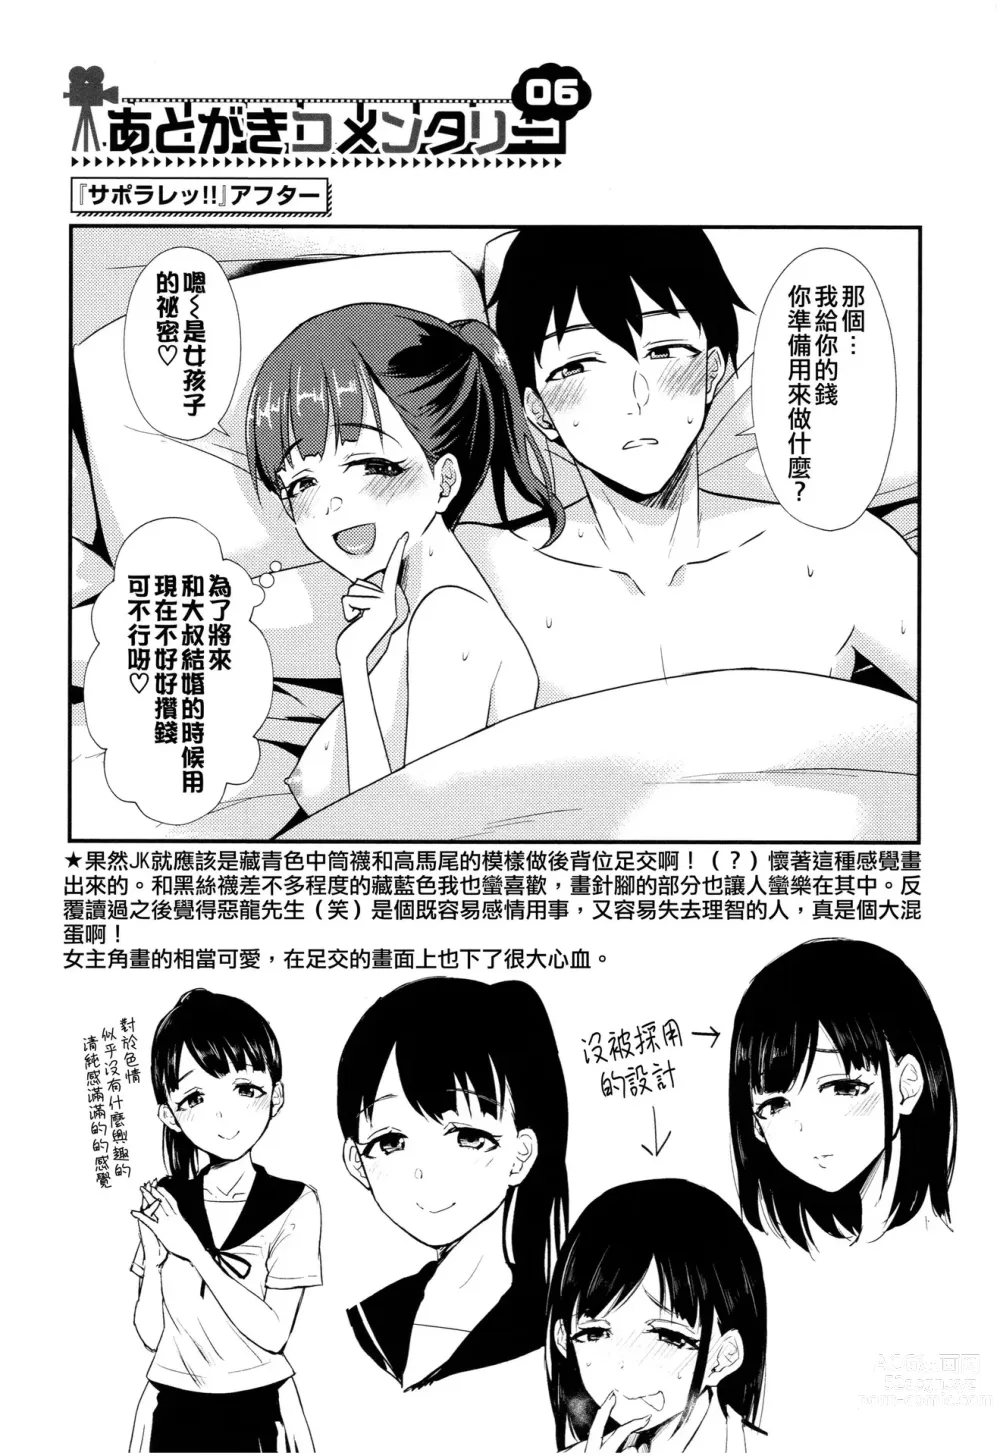 Page 191 of manga Otome Initiative - Girls Initiative (uncensored)